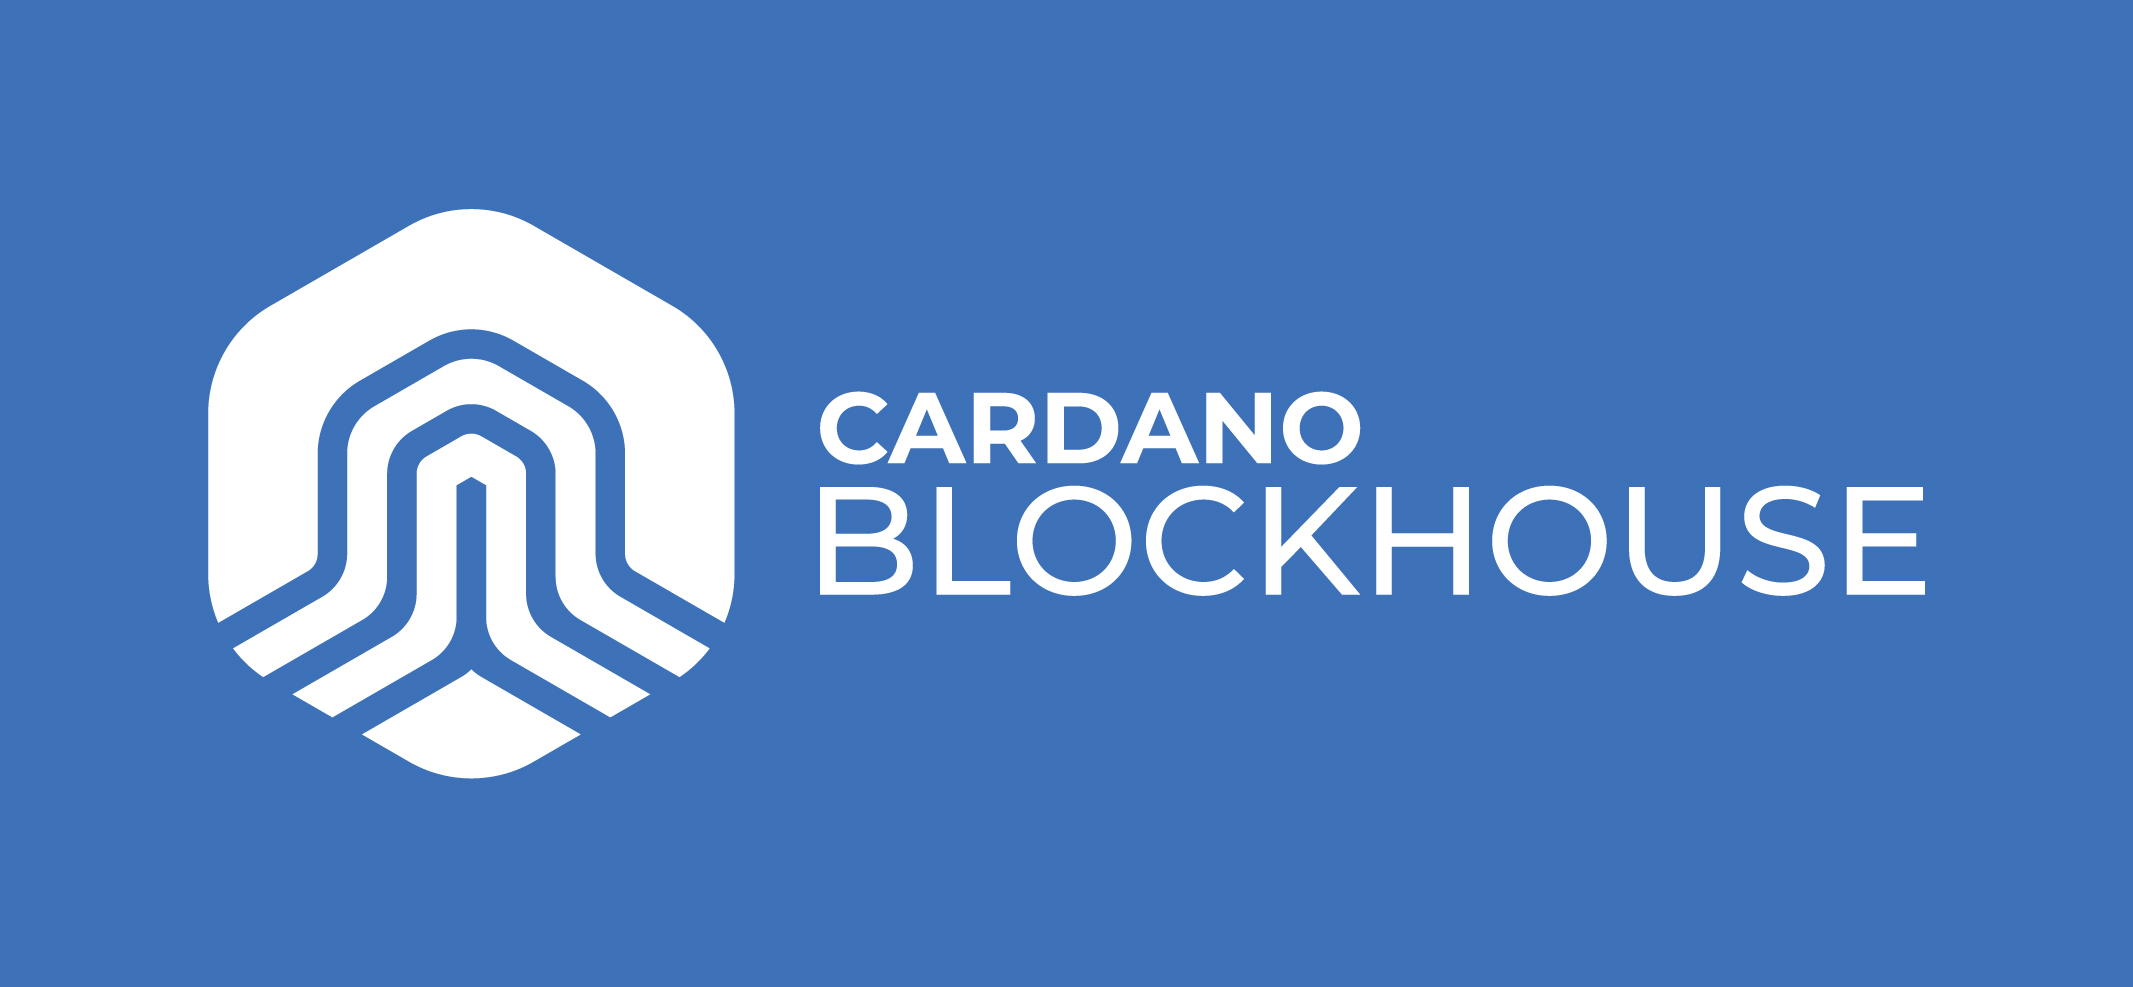 Cardano Blockhouse